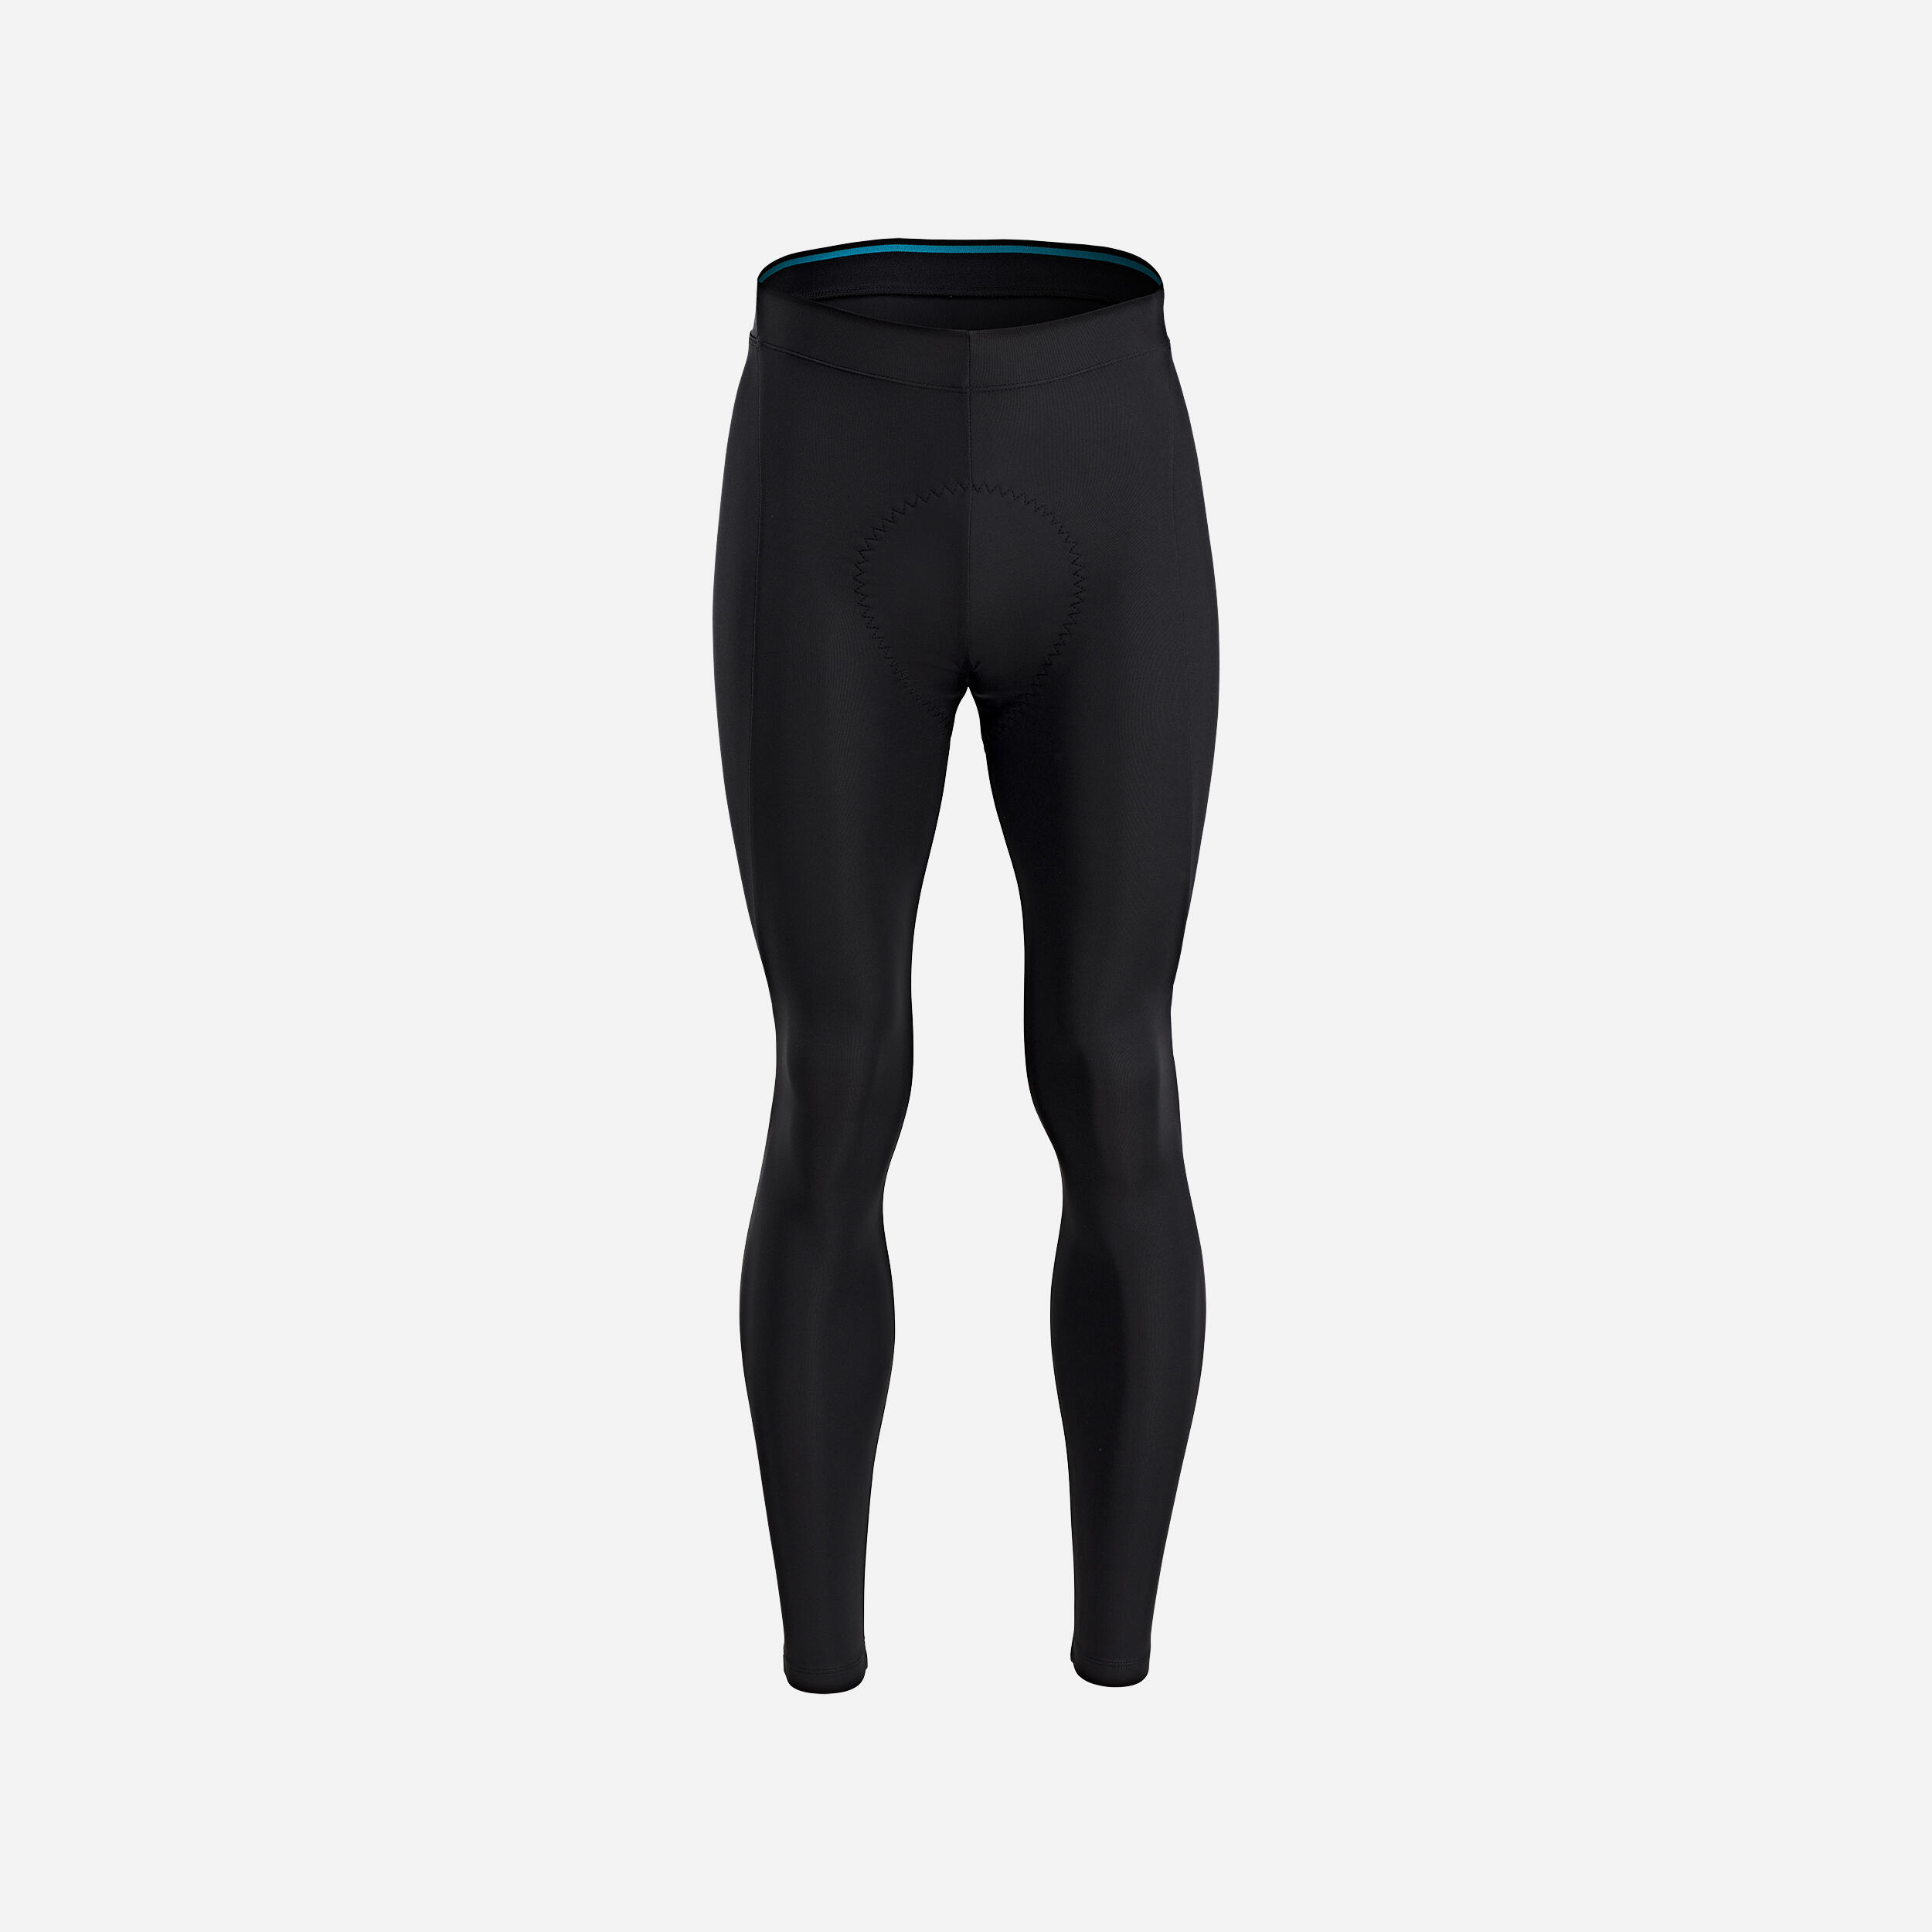 RBX Womens Legging Pant Elastic Waist Running Jogging Black Size